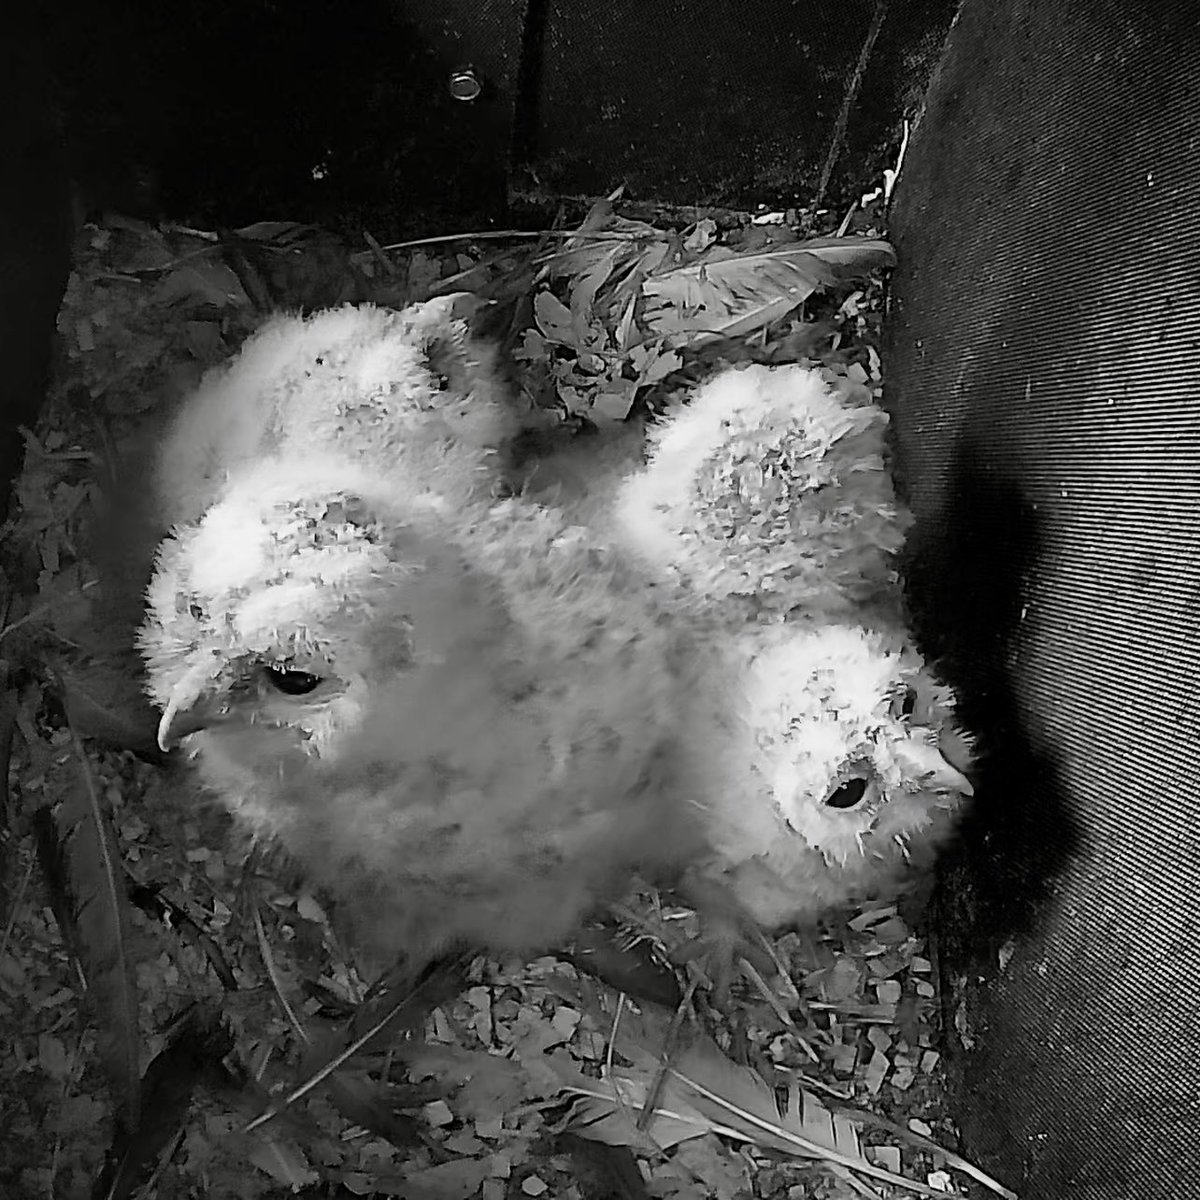 Yep - still 4 then! 💚🦉
#tawnyowl #owlets #nestcam #nature #wildlife @GreenFeathersUK